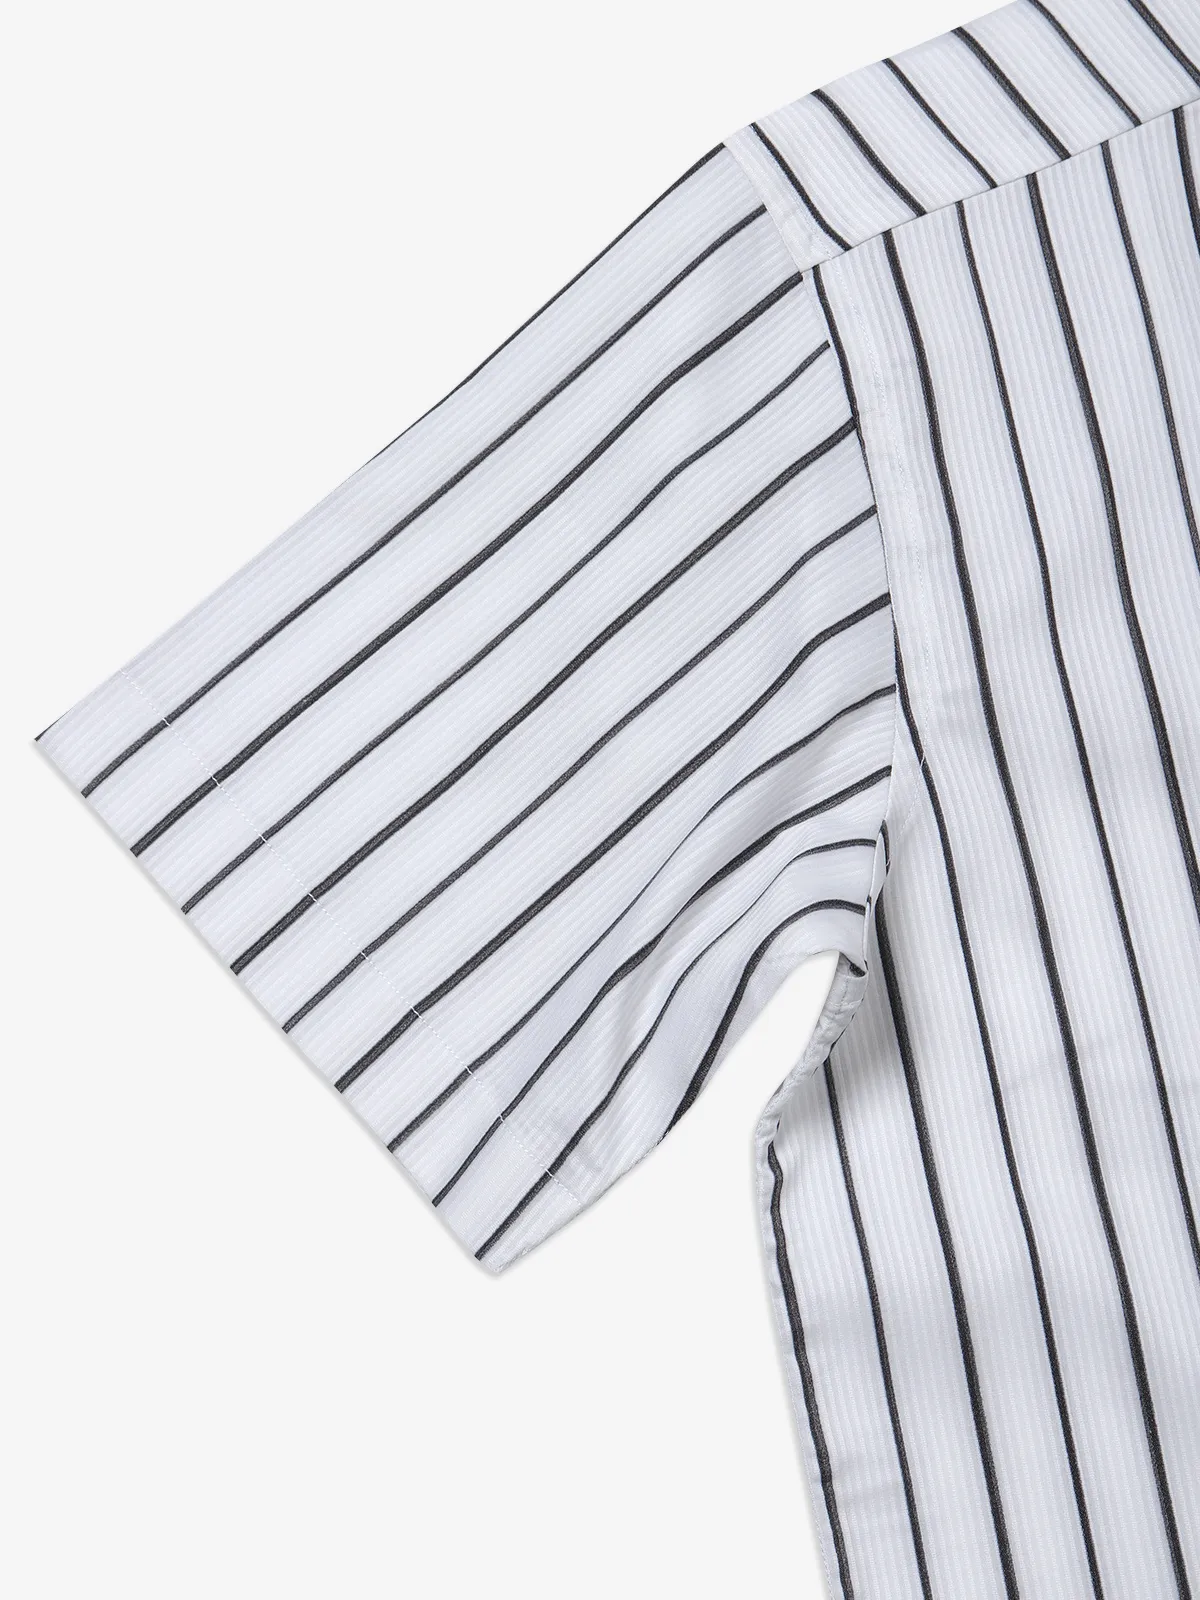 AVEGA white stripe casual shirt